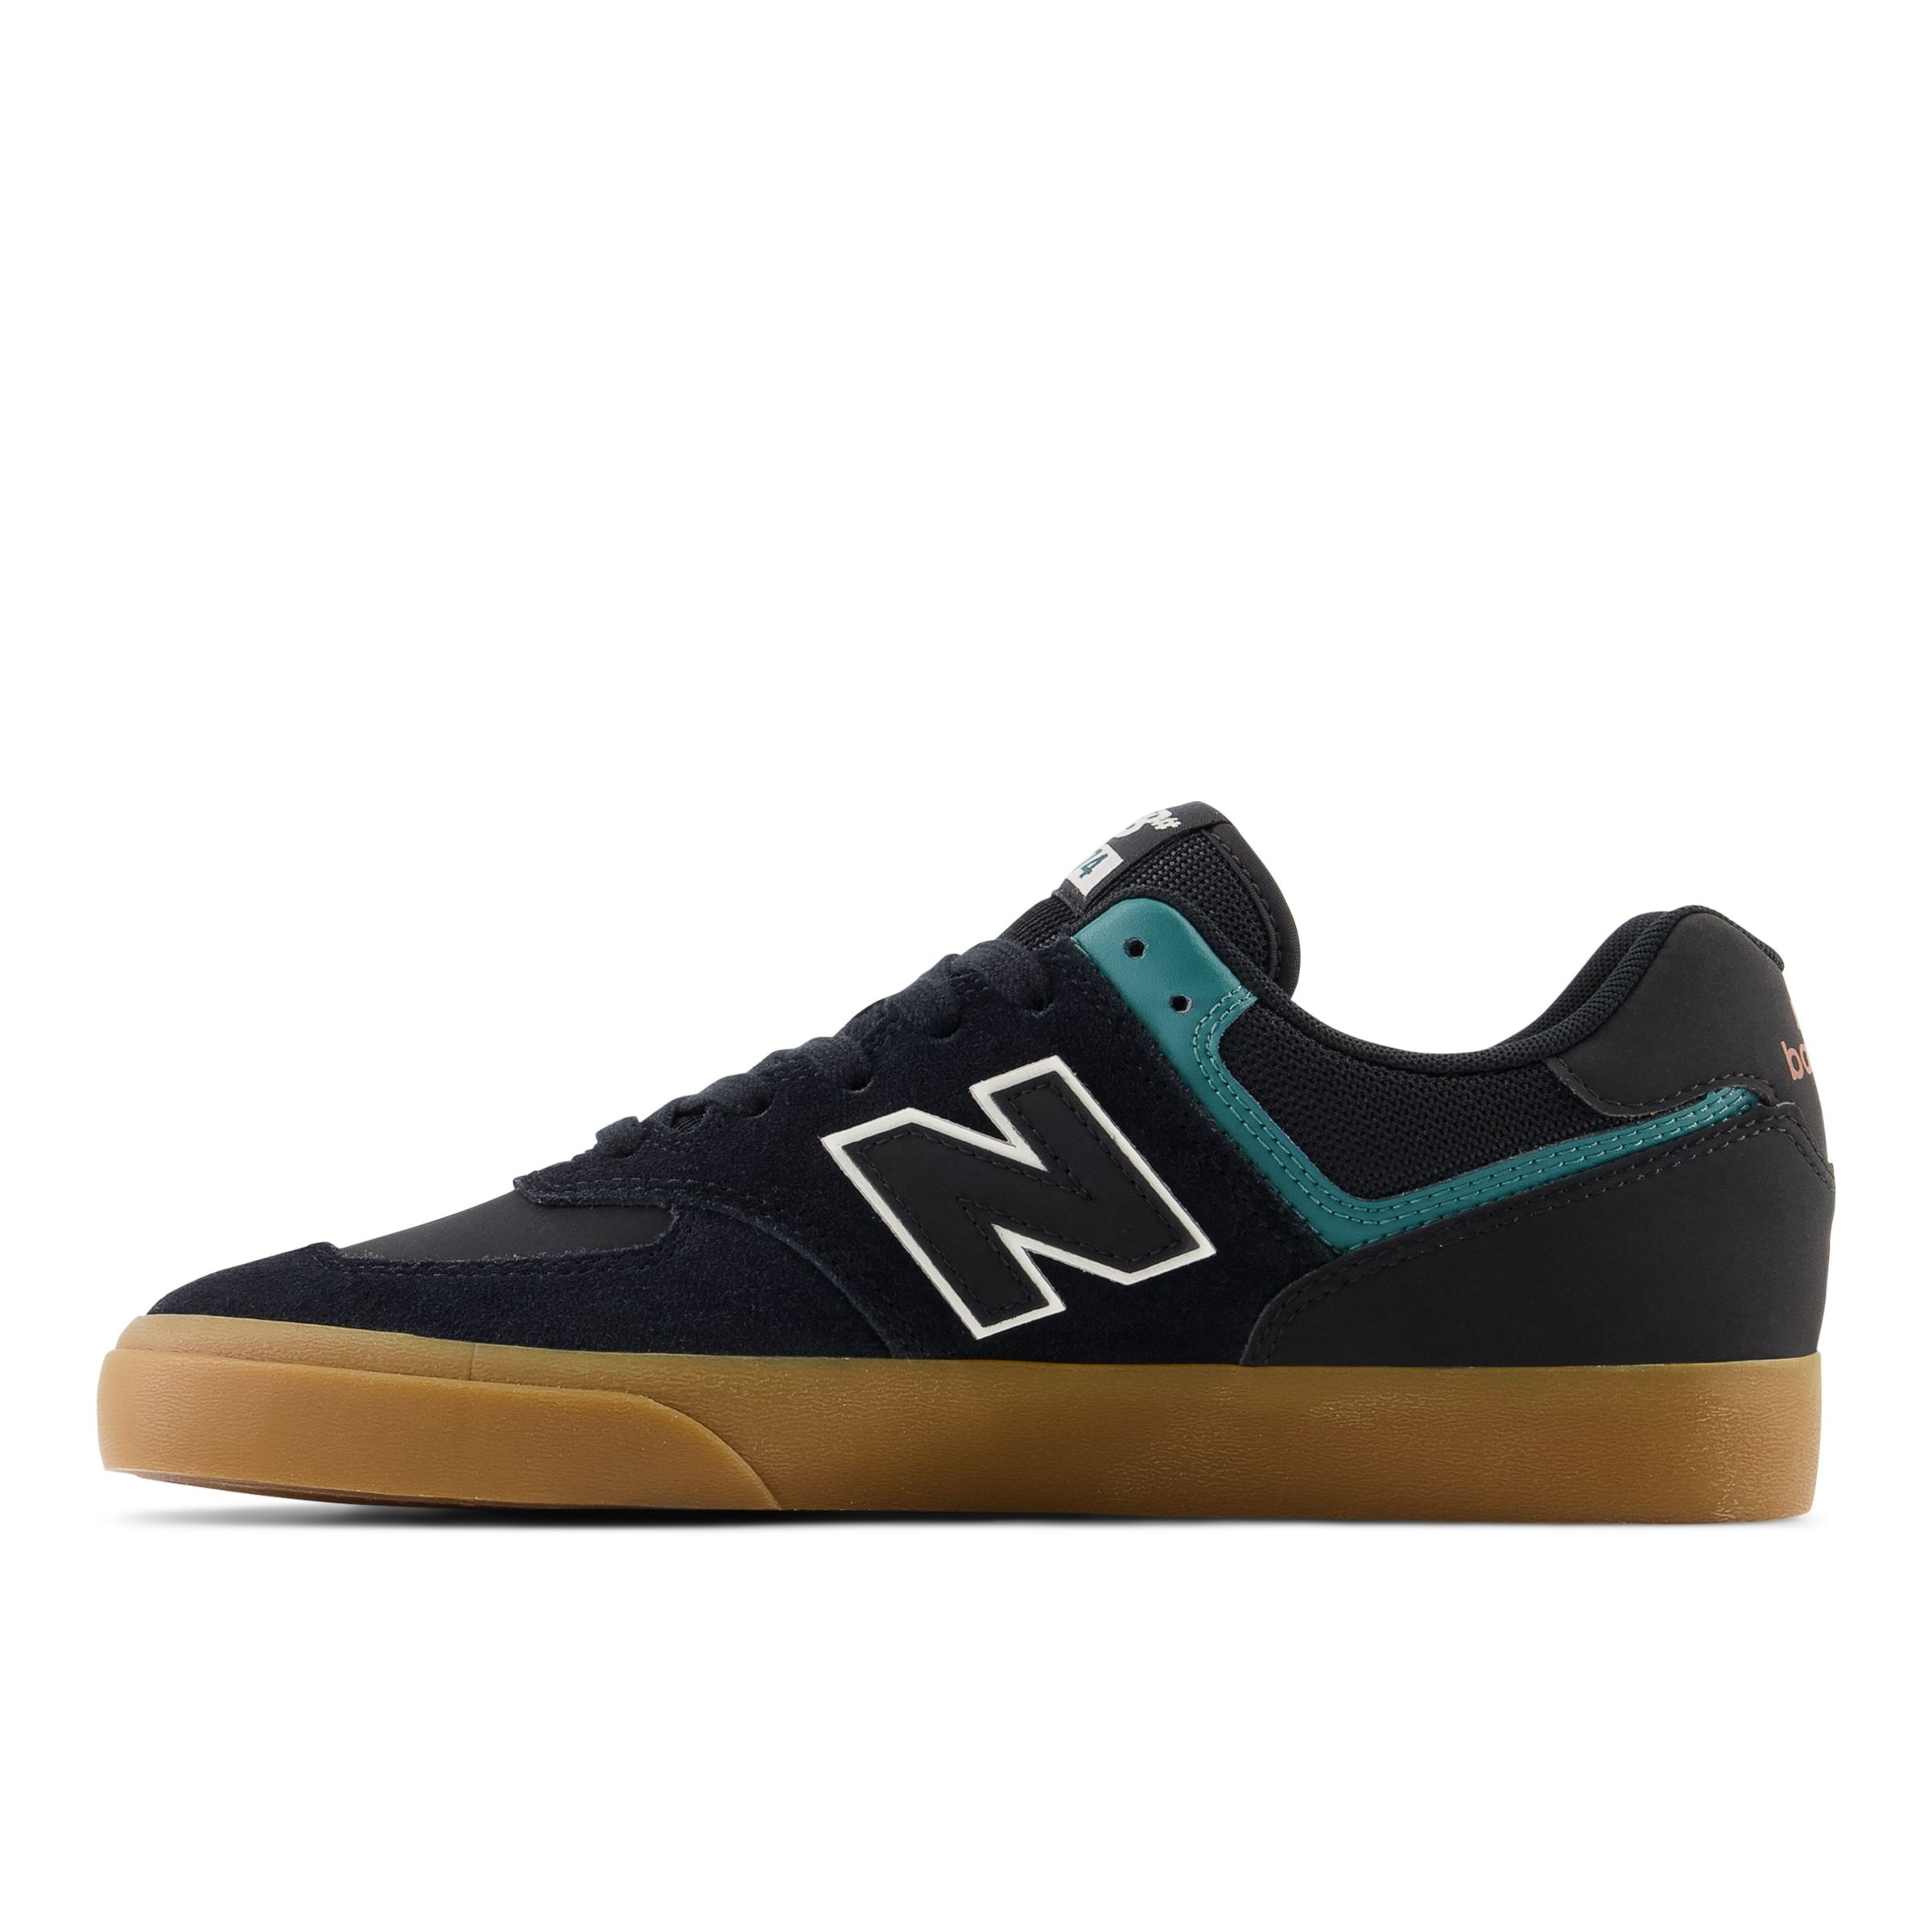 NB Numeric 574 Vulc - New Balance